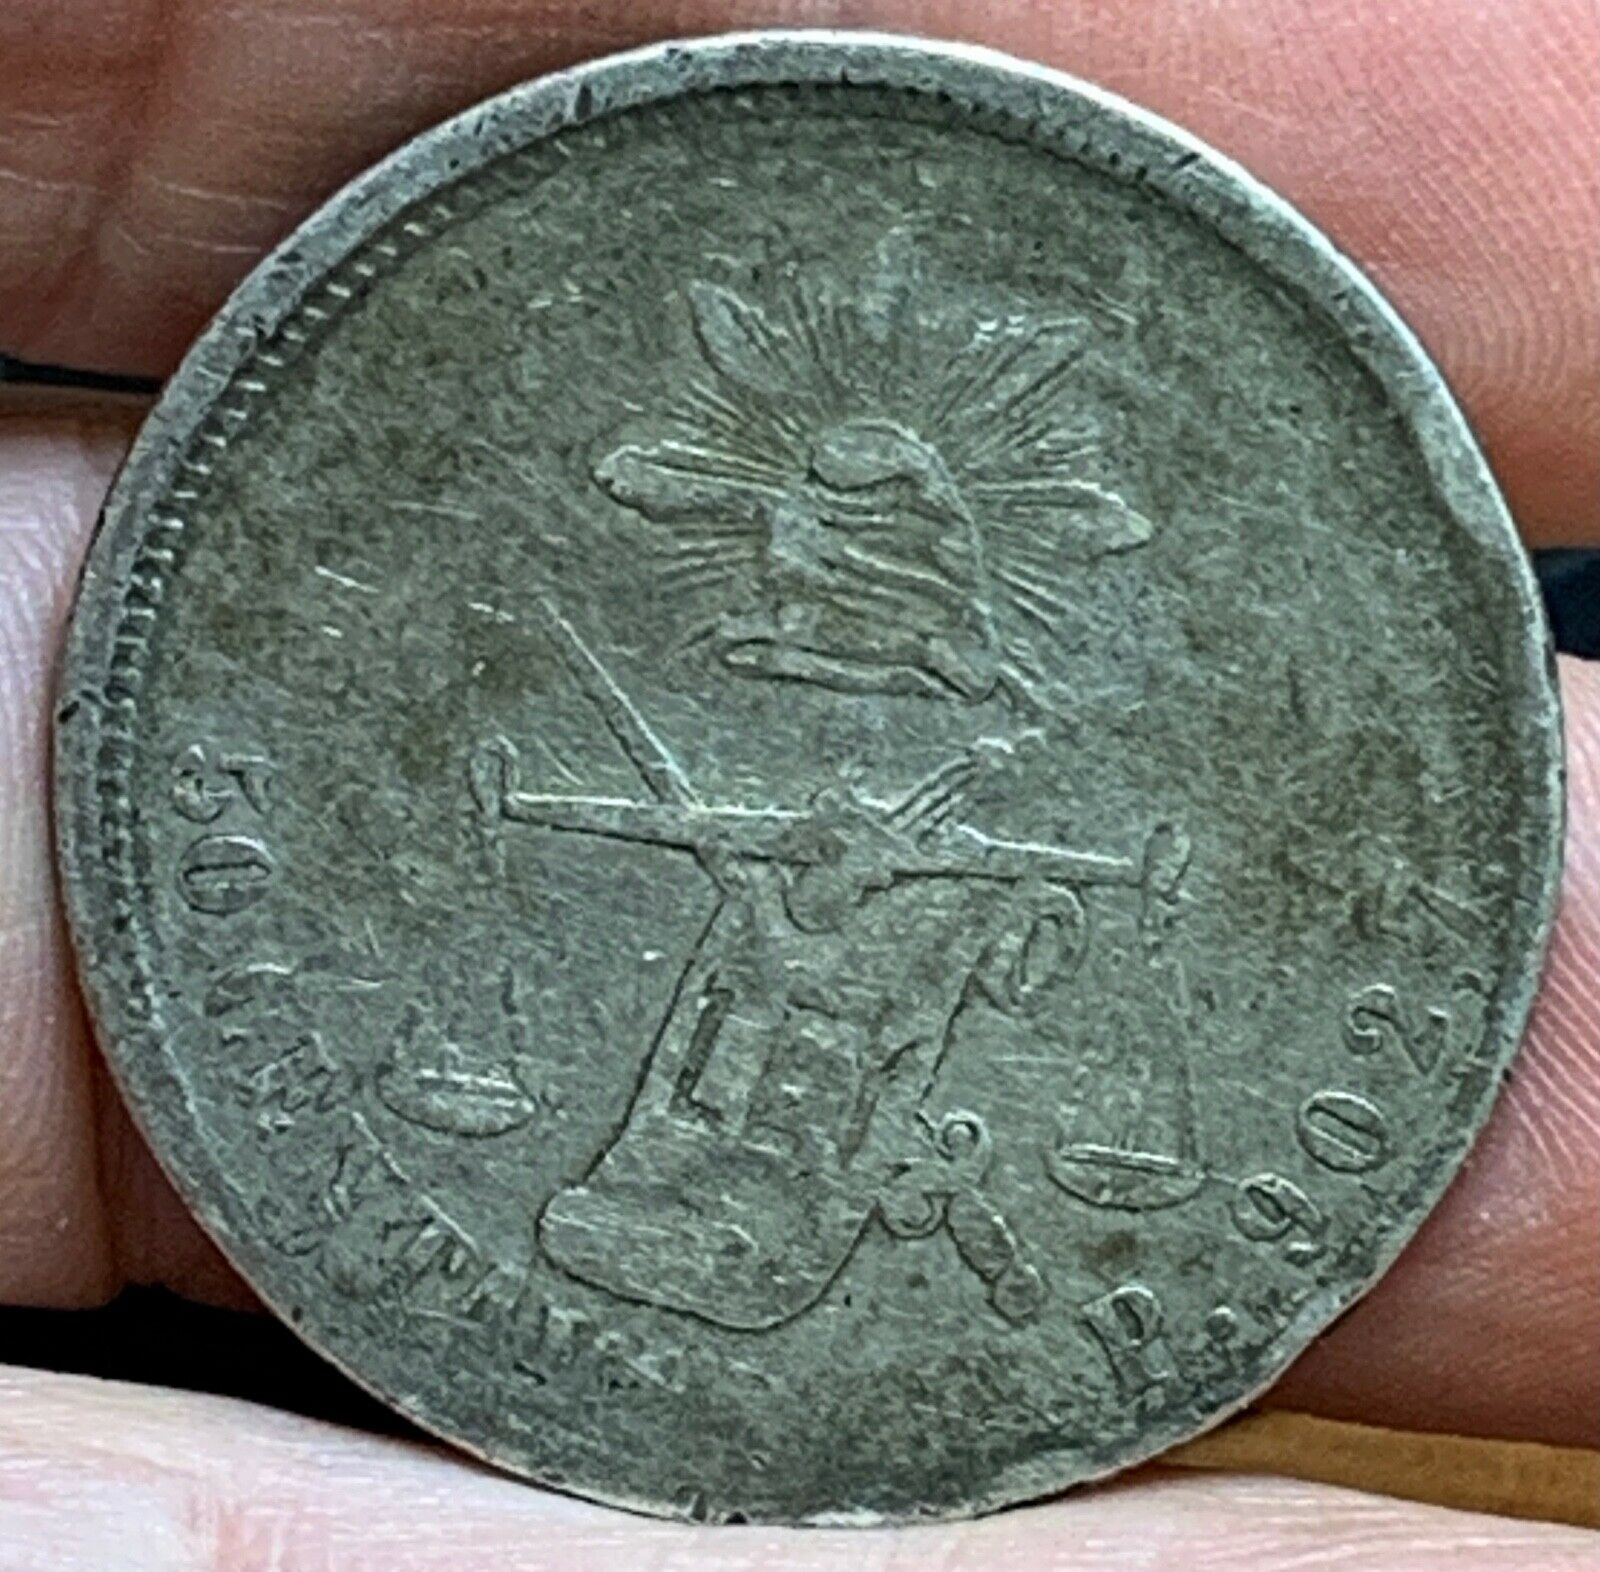 1875 Cnp Mexico 50 Centavos Silver Coin Km #407.2  ***no Reserve***